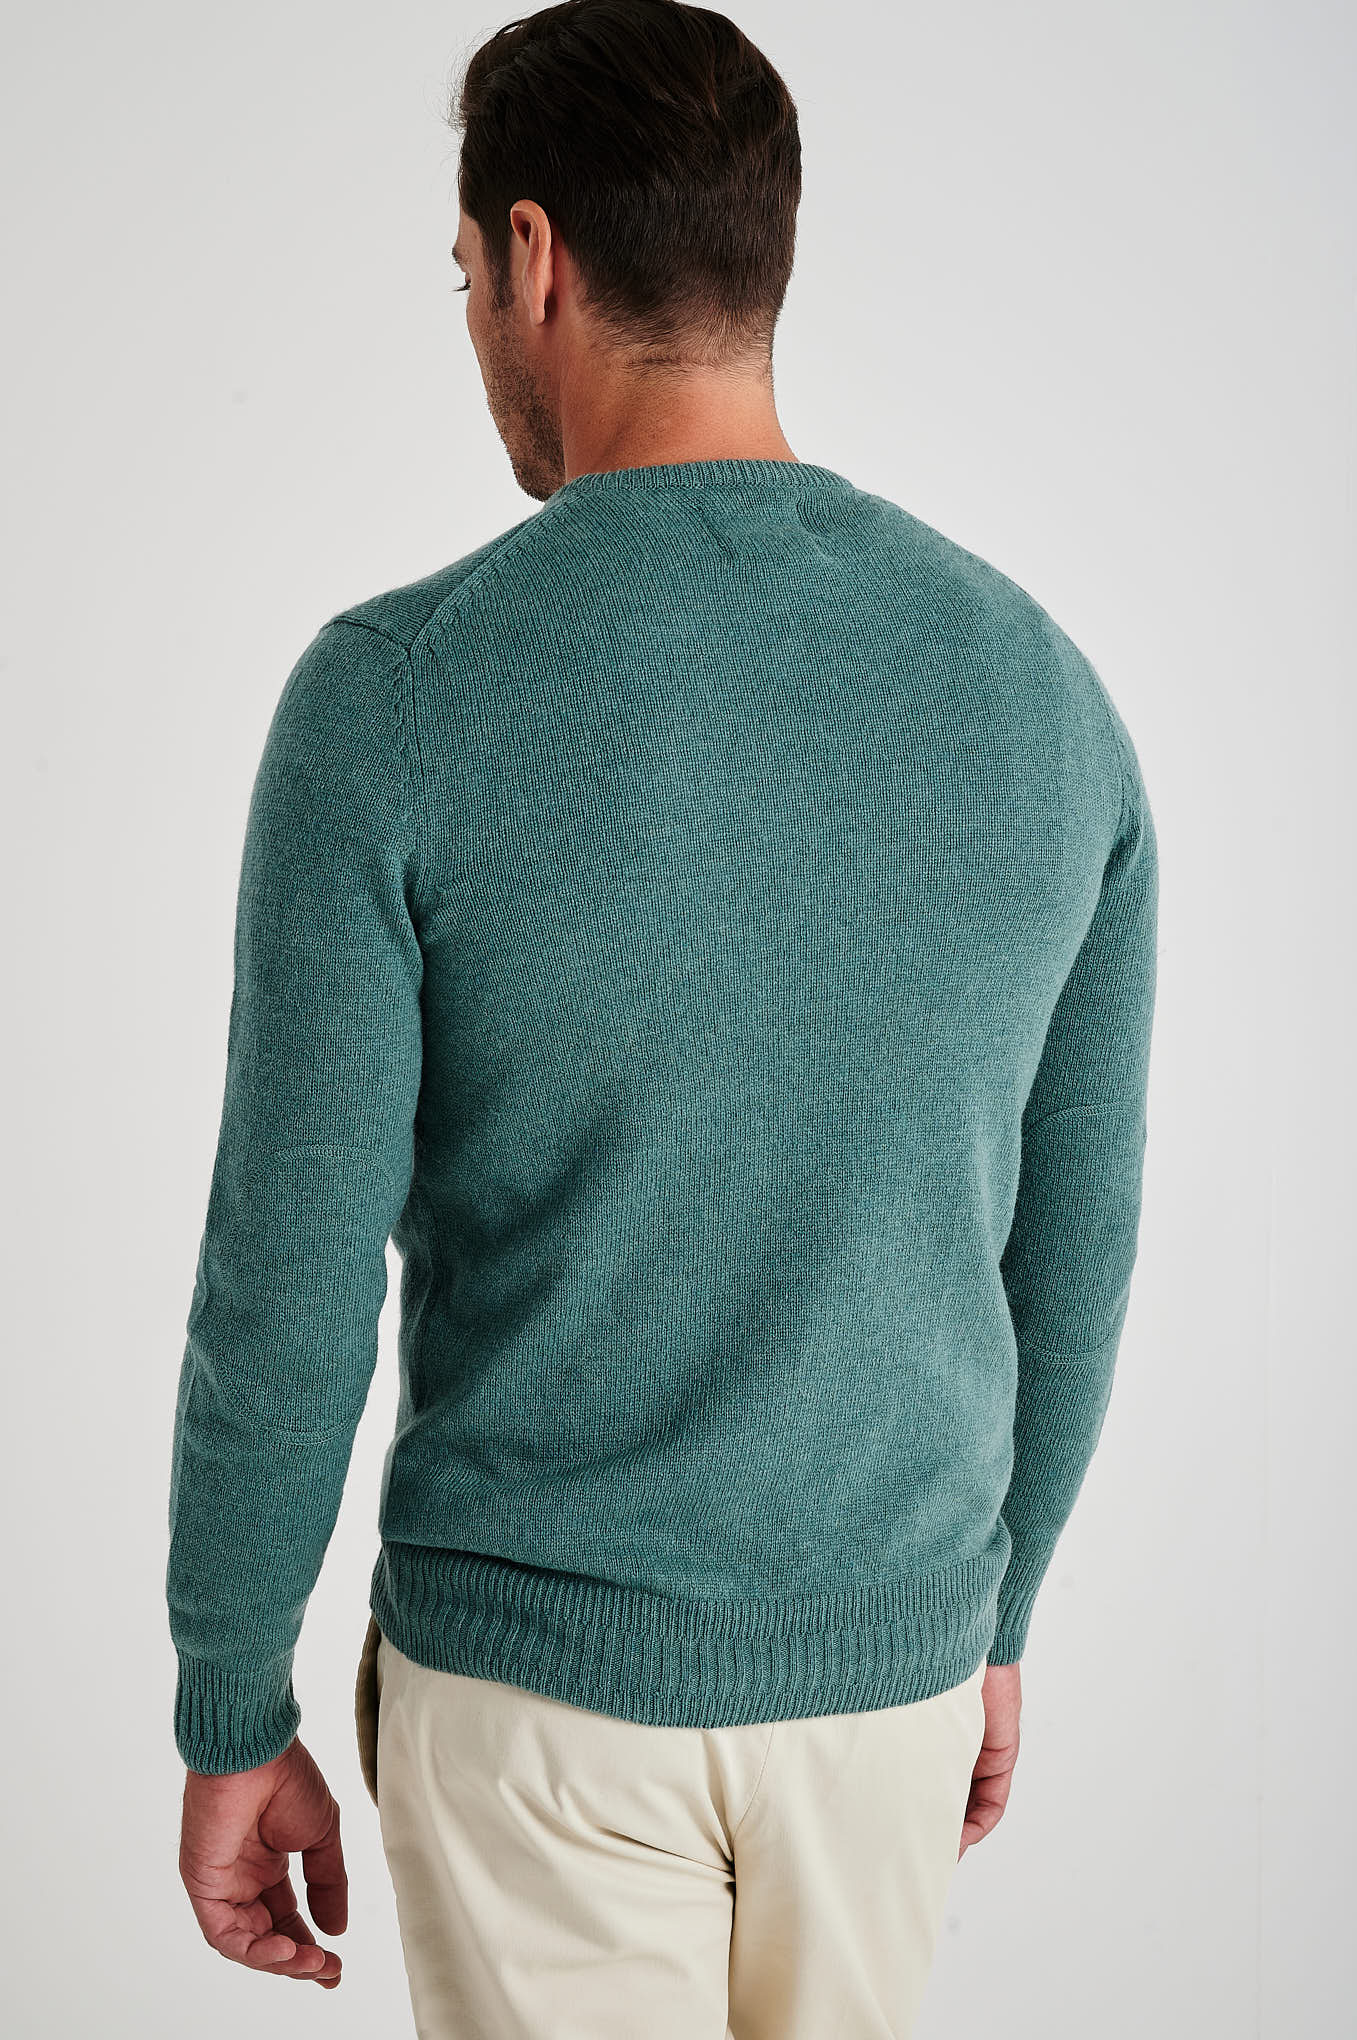 Sweater Teal Casual Man